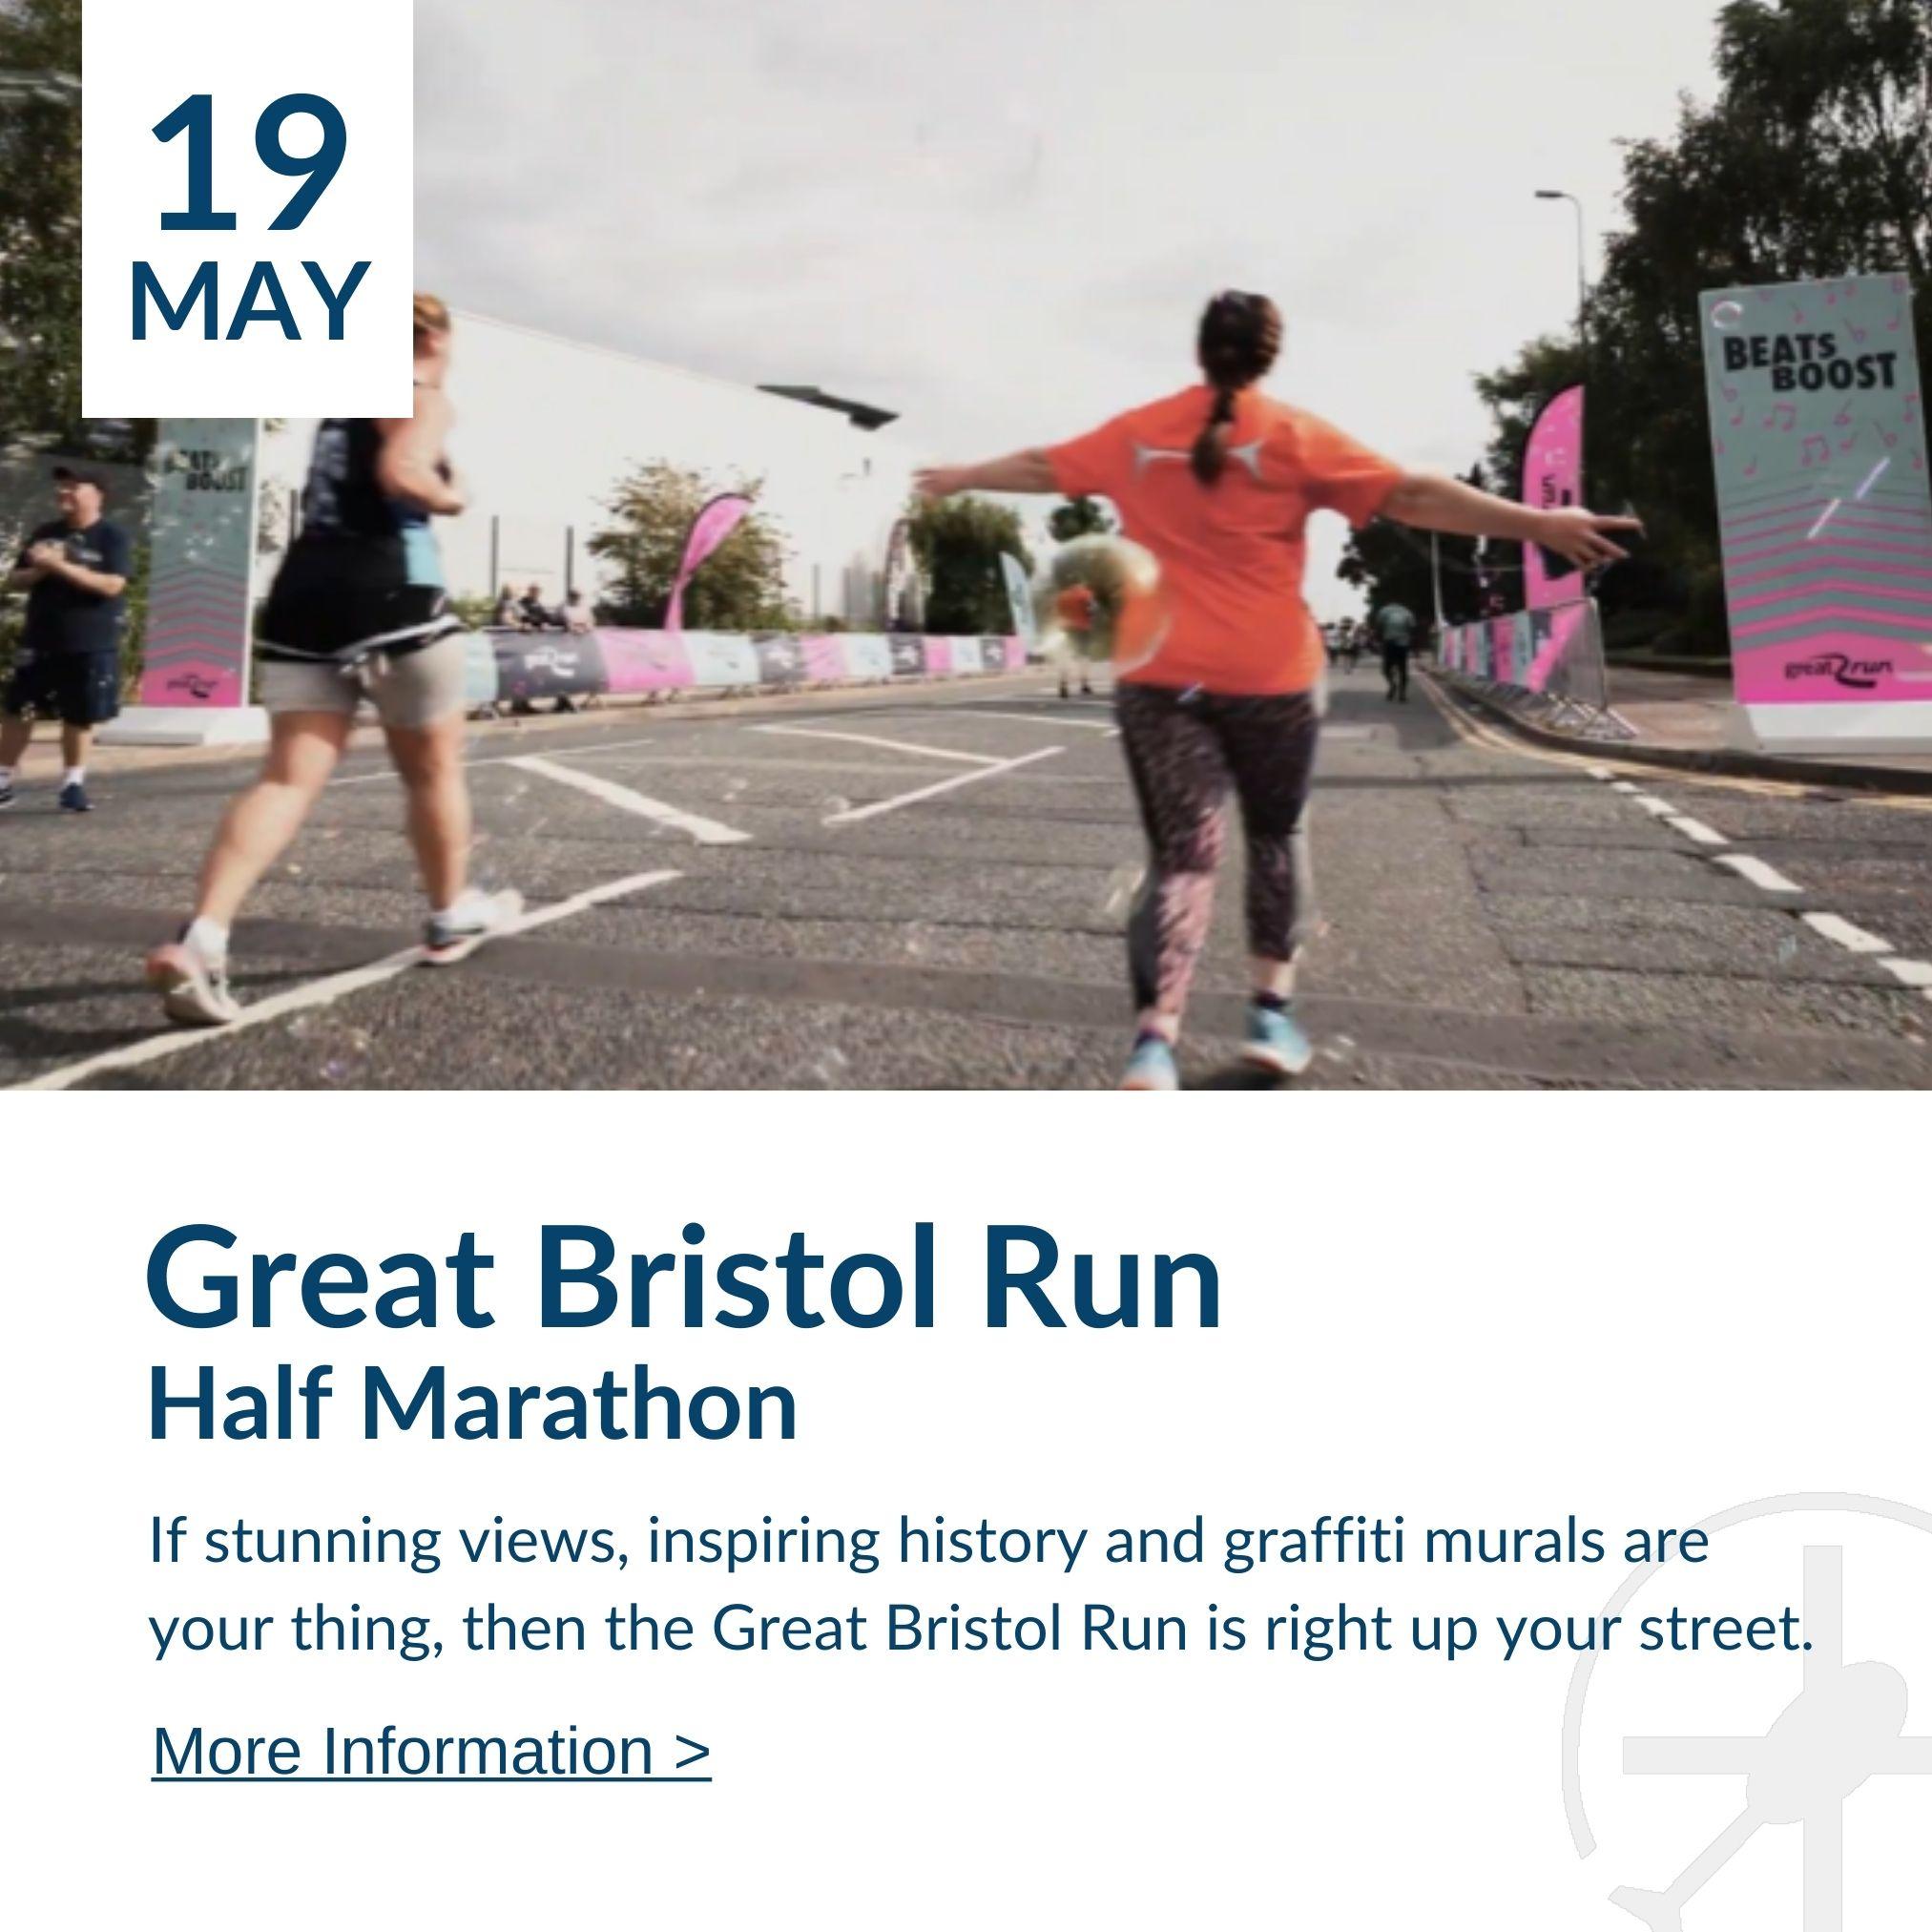 Events - Great Bristol Run